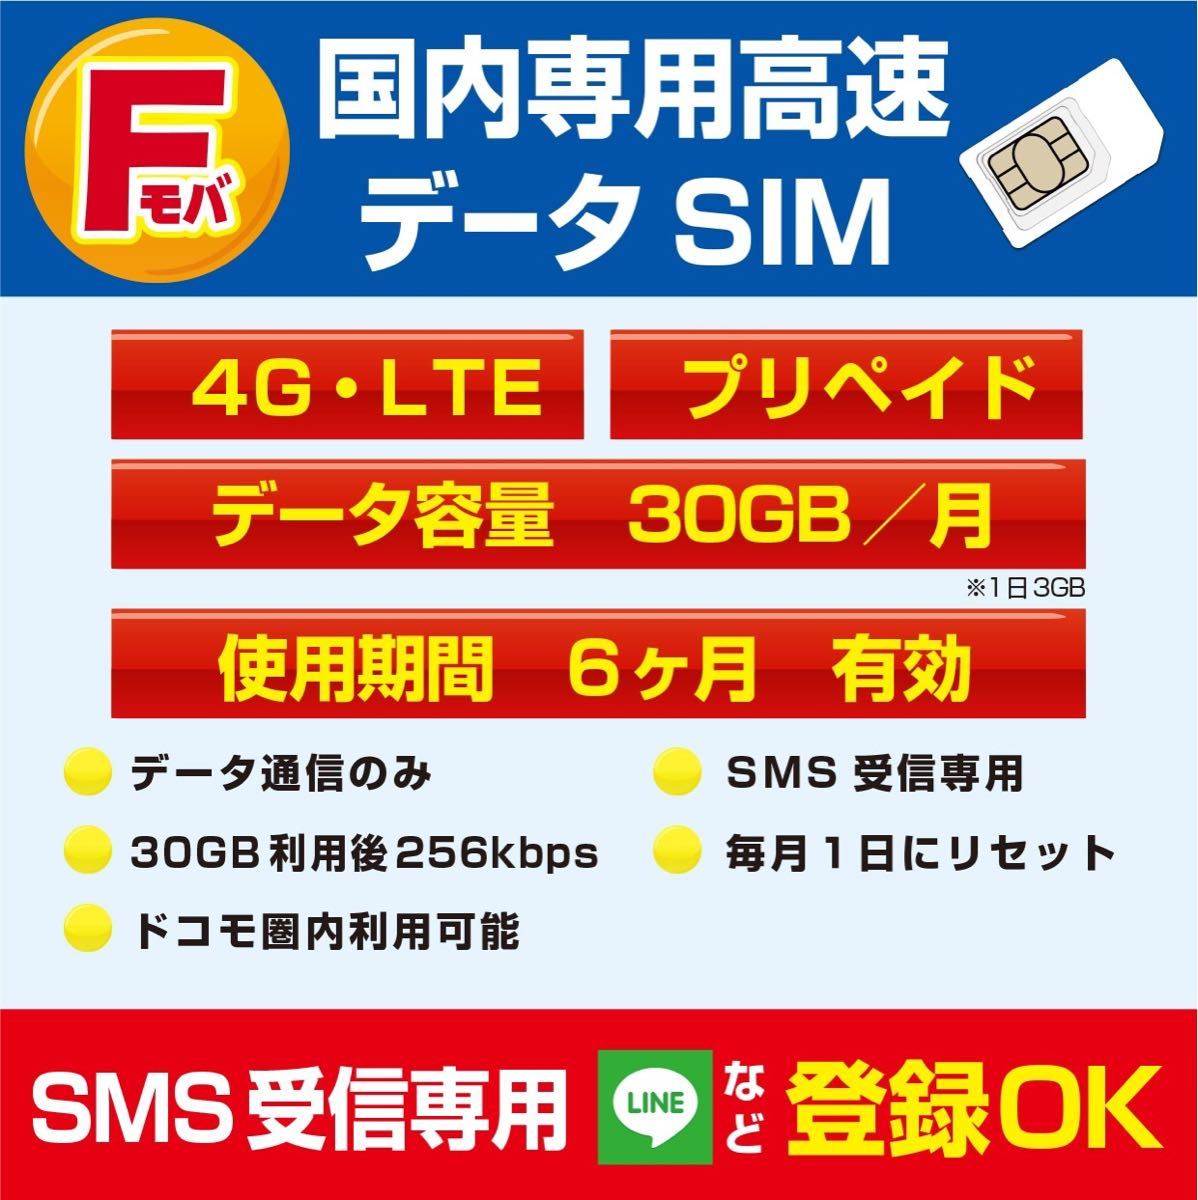 SMS認証プリペイドデータ通信SIM 30GB/月 6カ月有効 ドコモ回線 - SIM